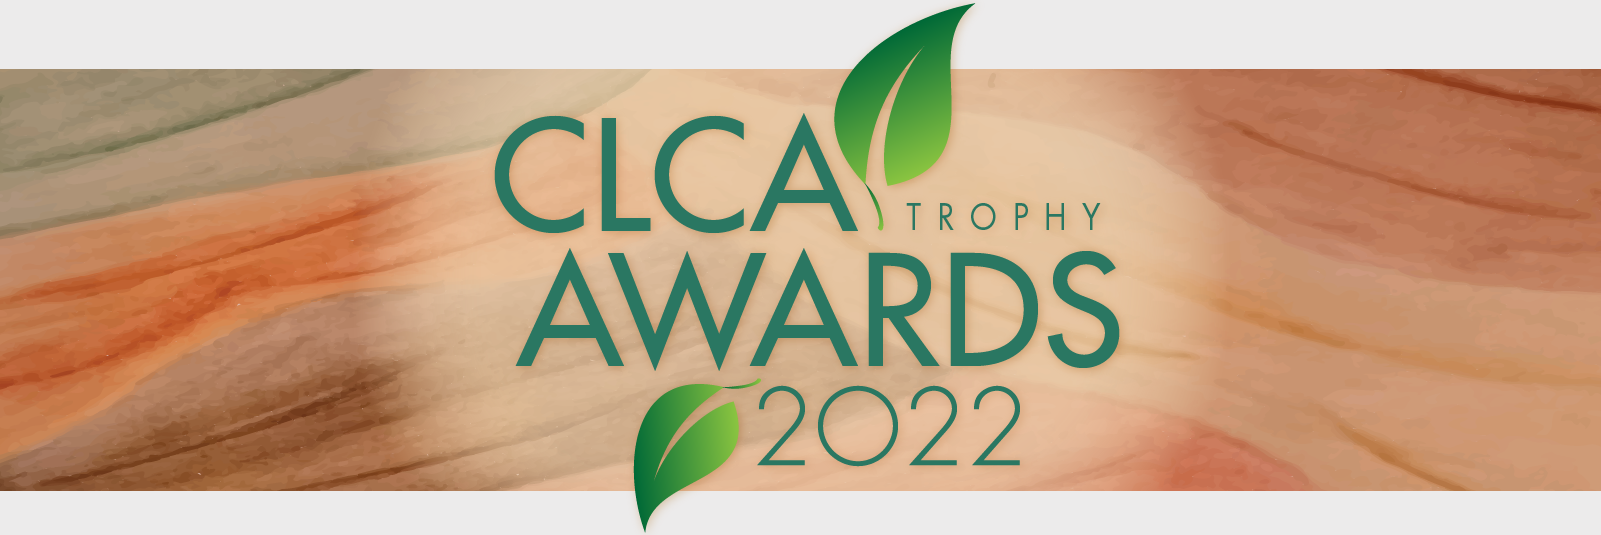 CLCA 2022 Trophy Awards